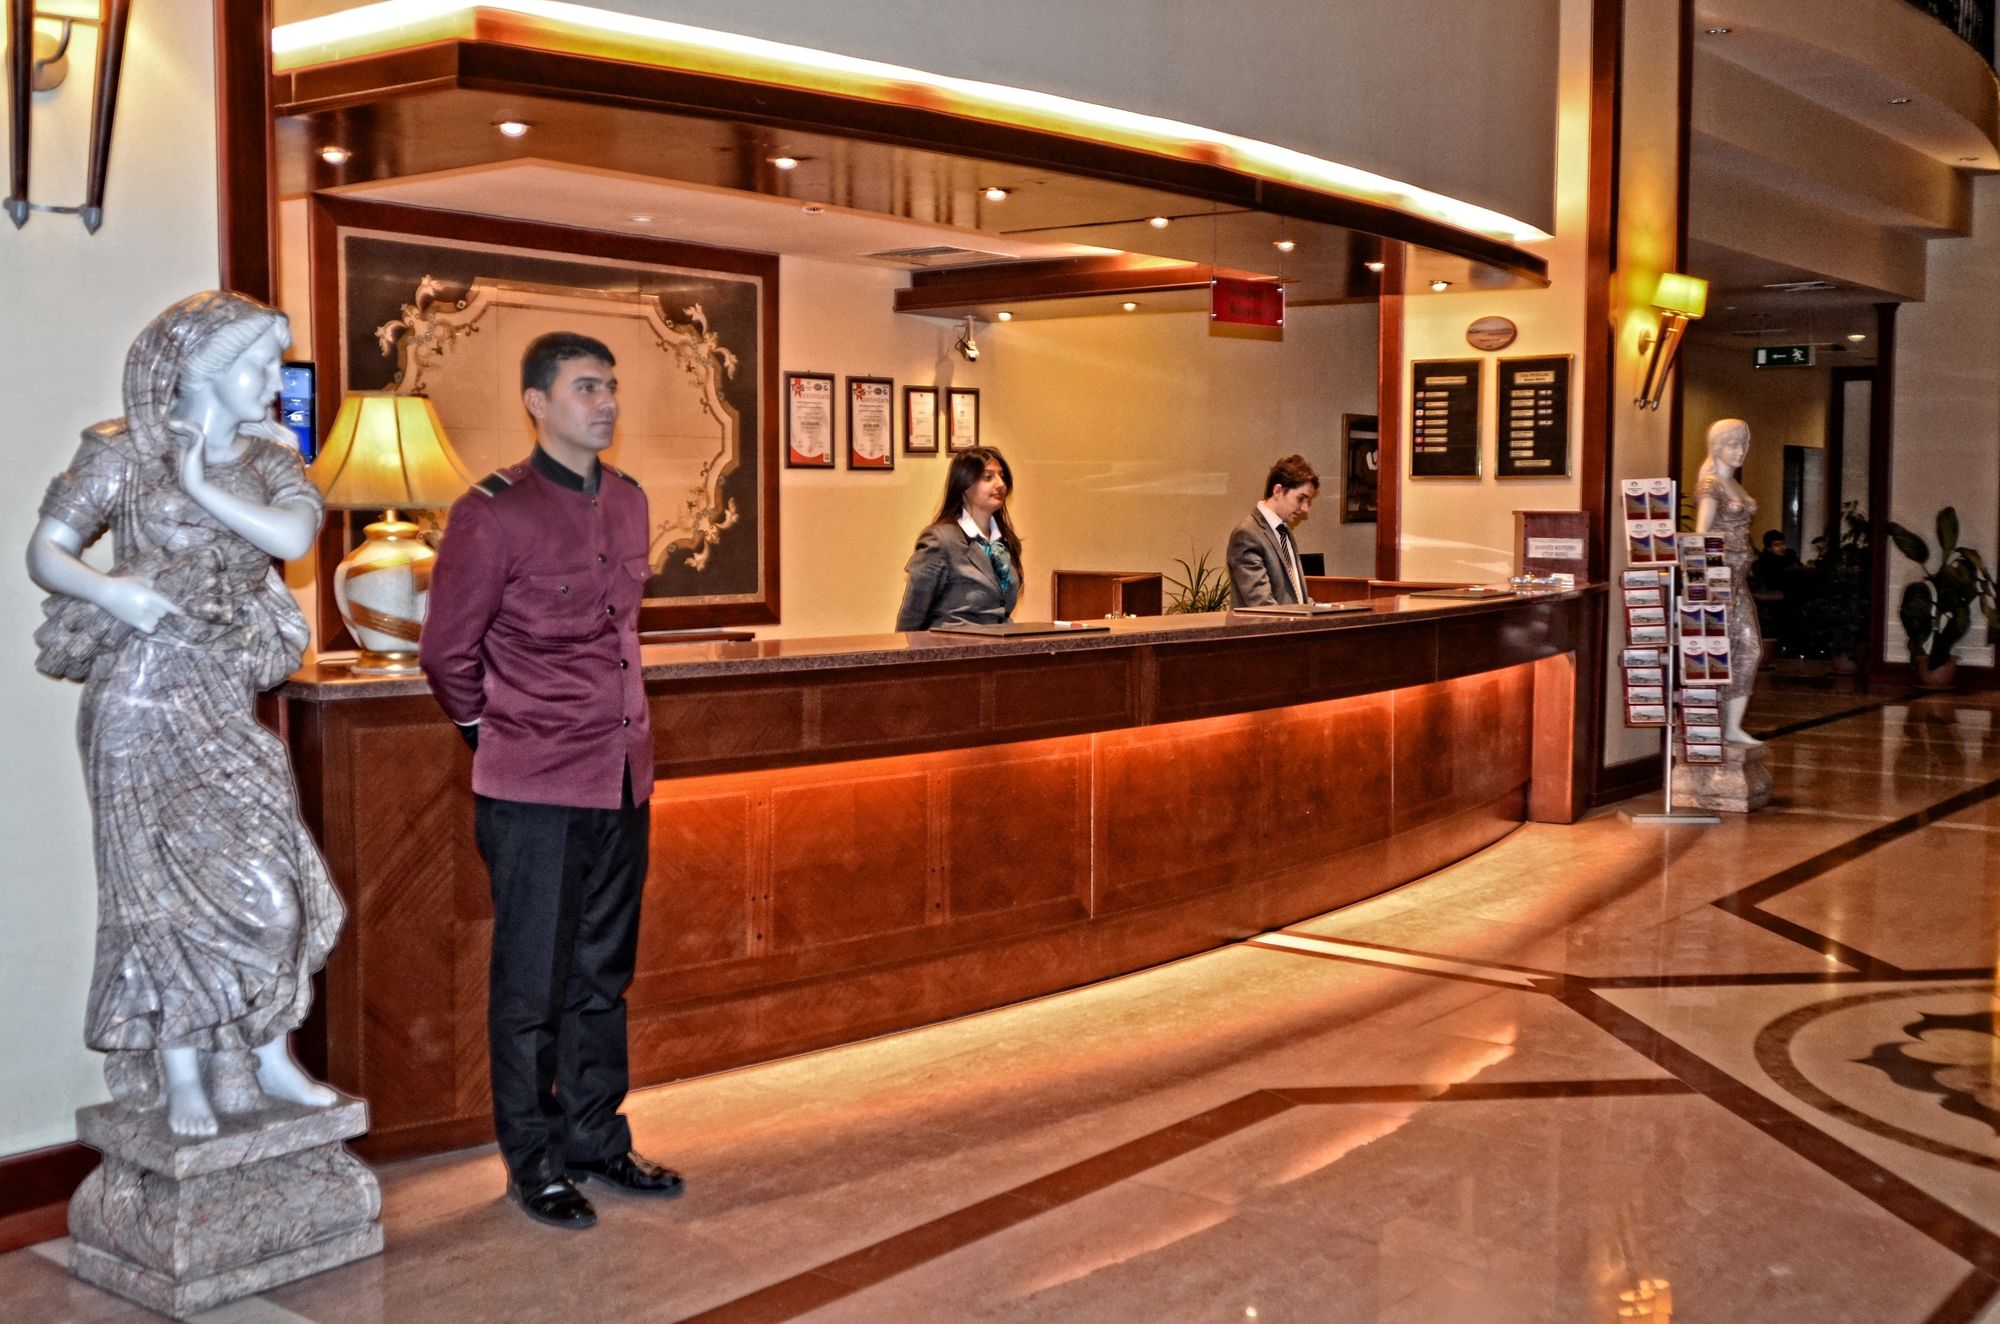 Akgun Elazig Hotel